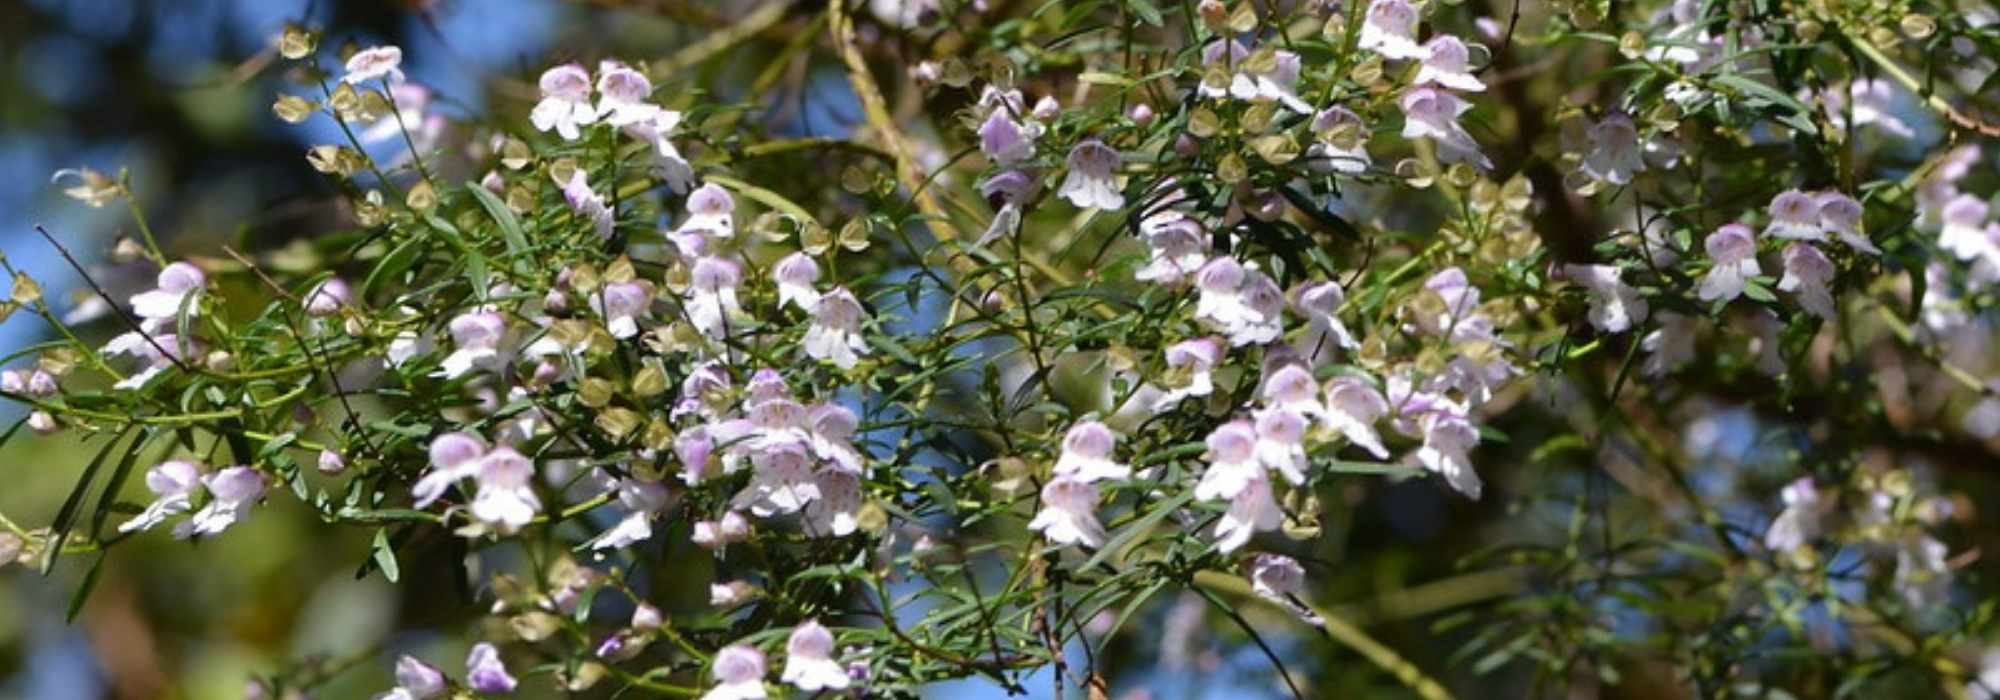 Prostanthera - Menthe australienne : planter et cultiver